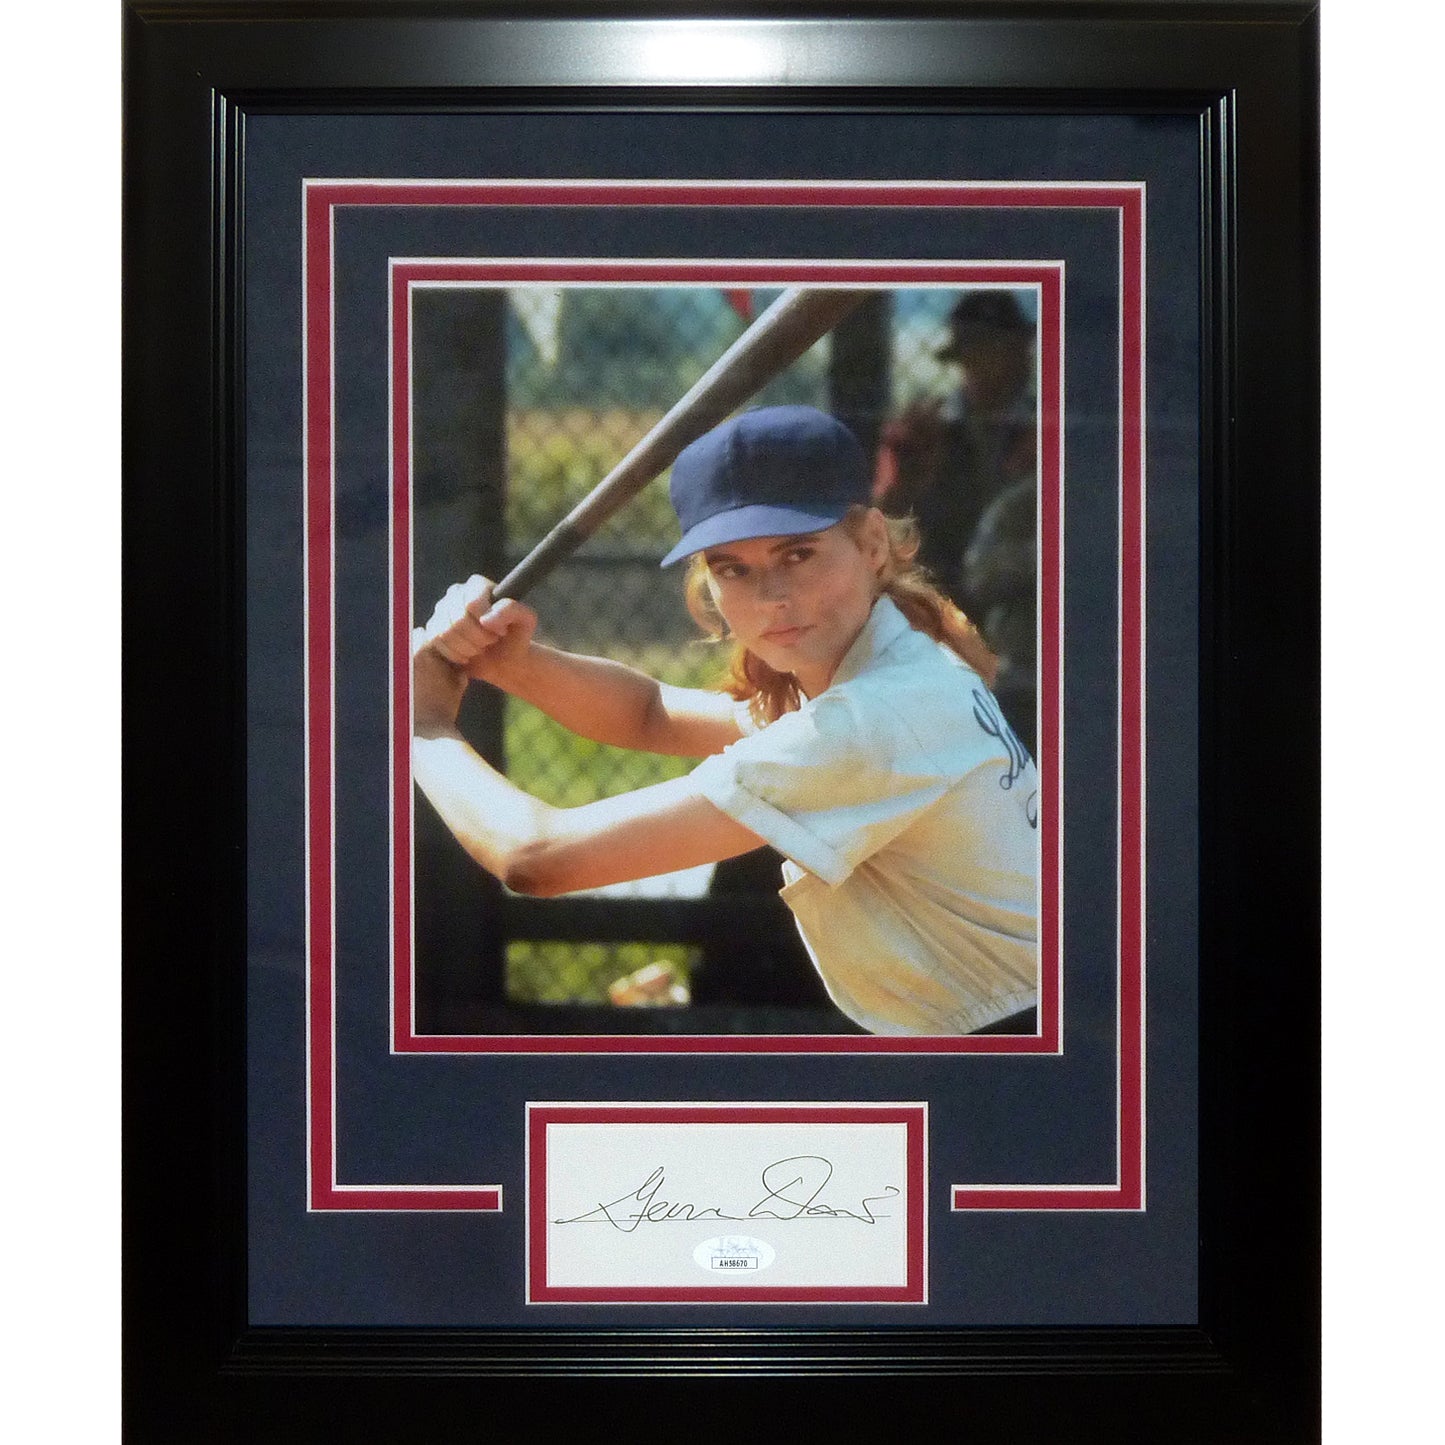 Geena Davis Autographed A League Of Their Own Signature Series Frame - JSA